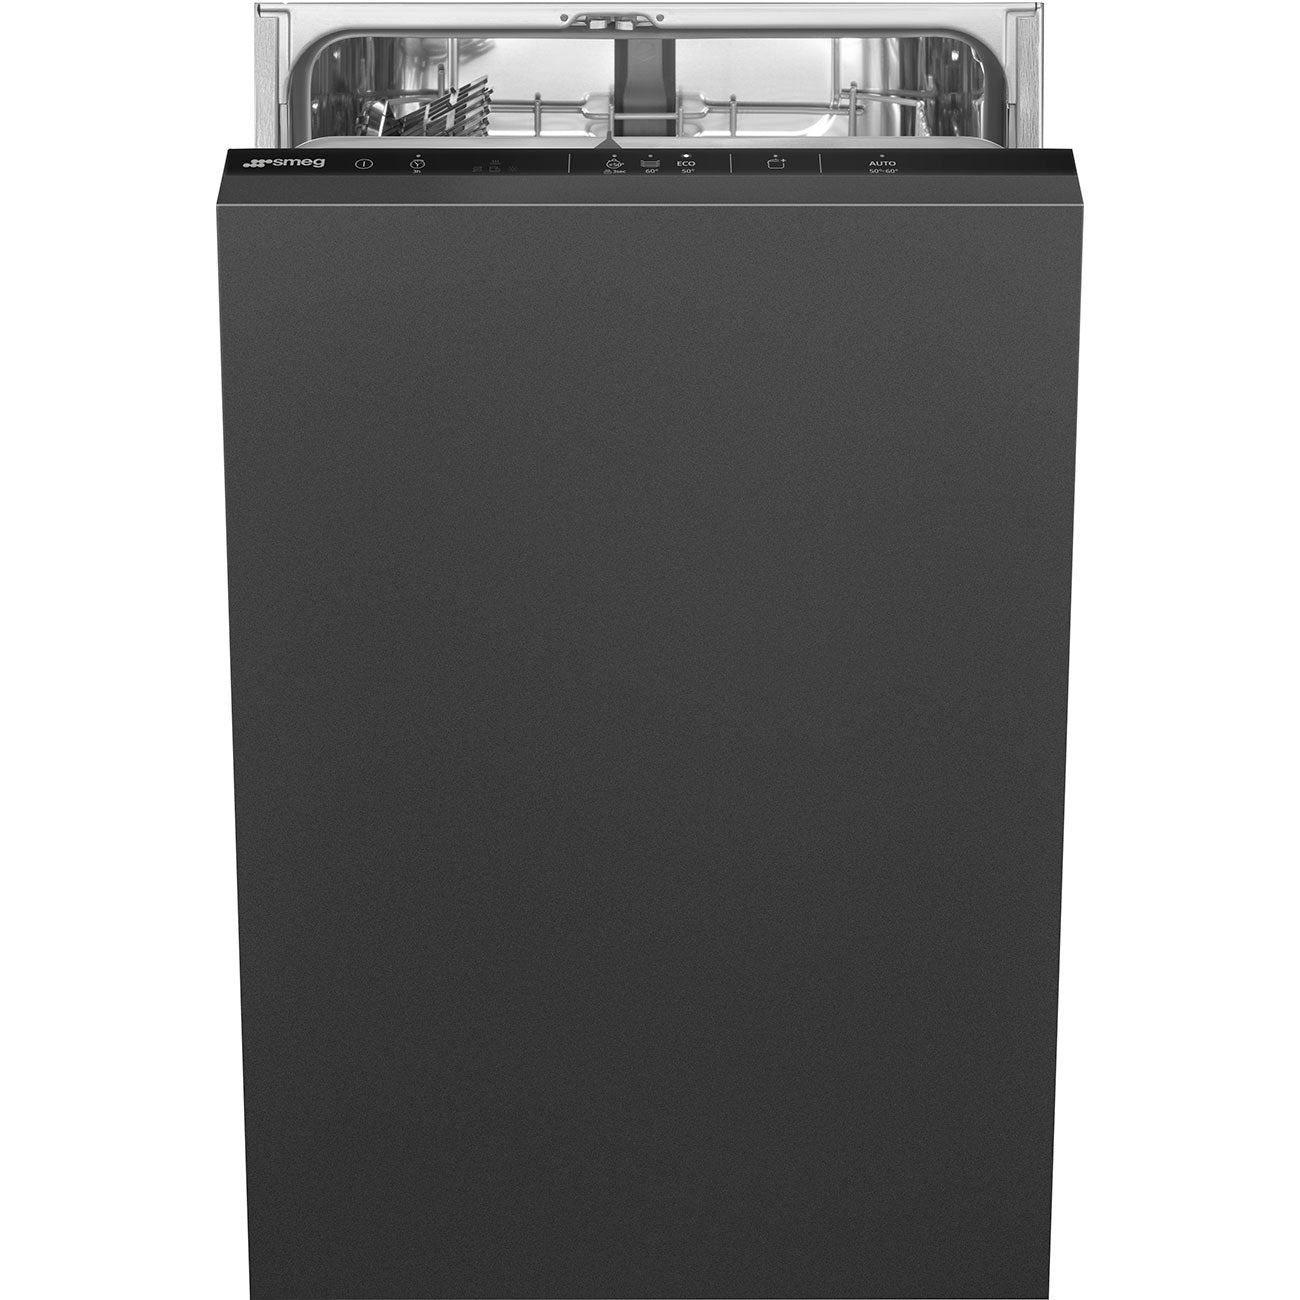 Máquina de lavar louça, Encastre, 45cm, 6 Programas